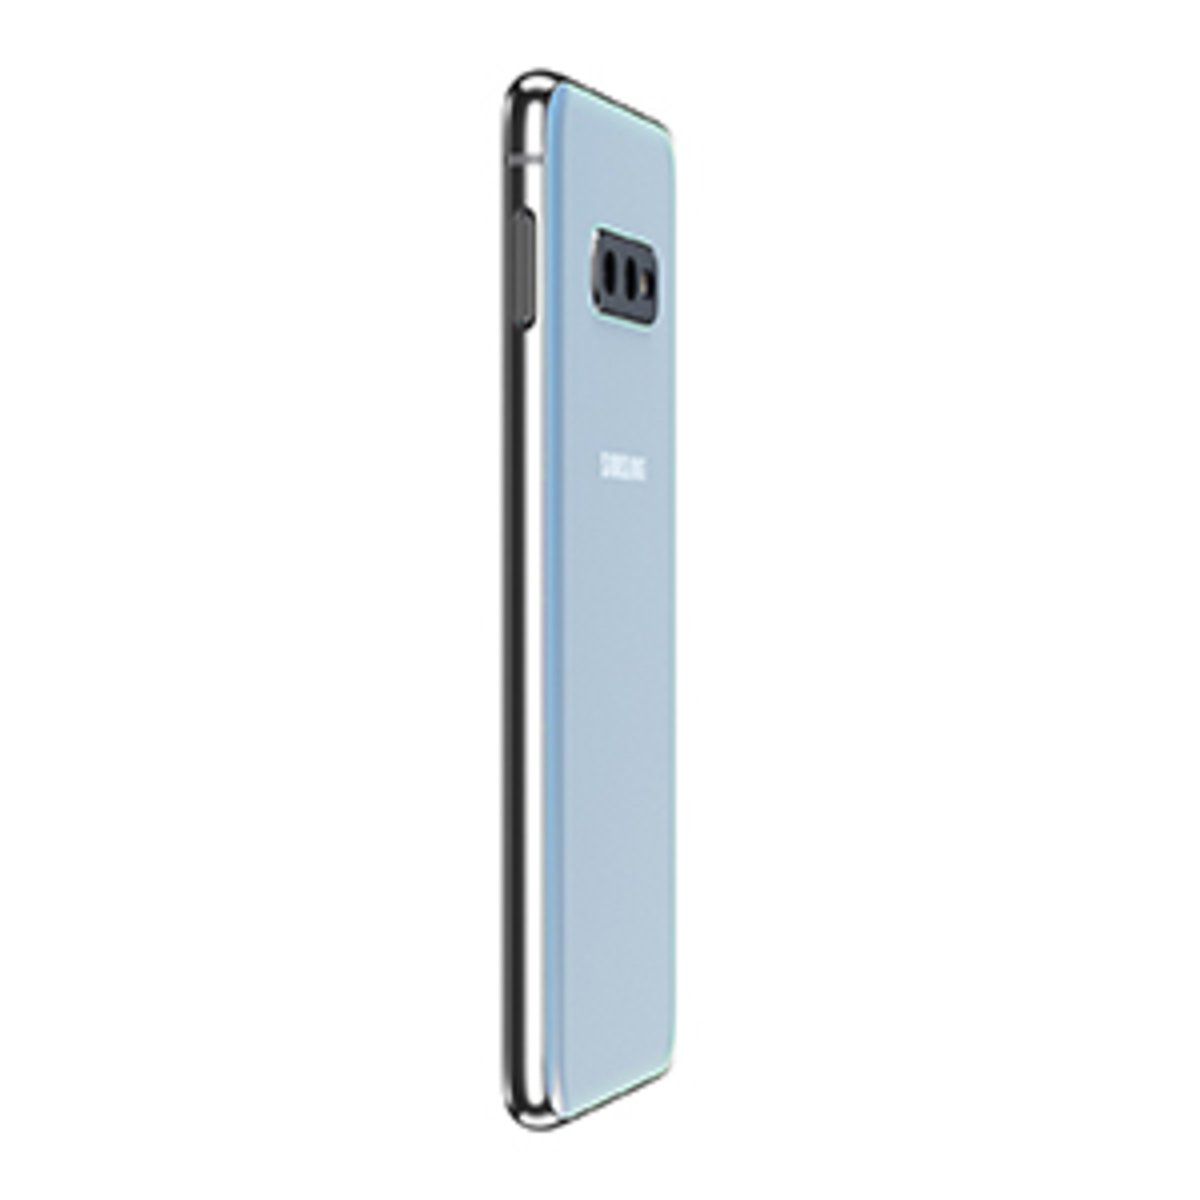 Samsung Galaxy S10e SM-G970 128GB White